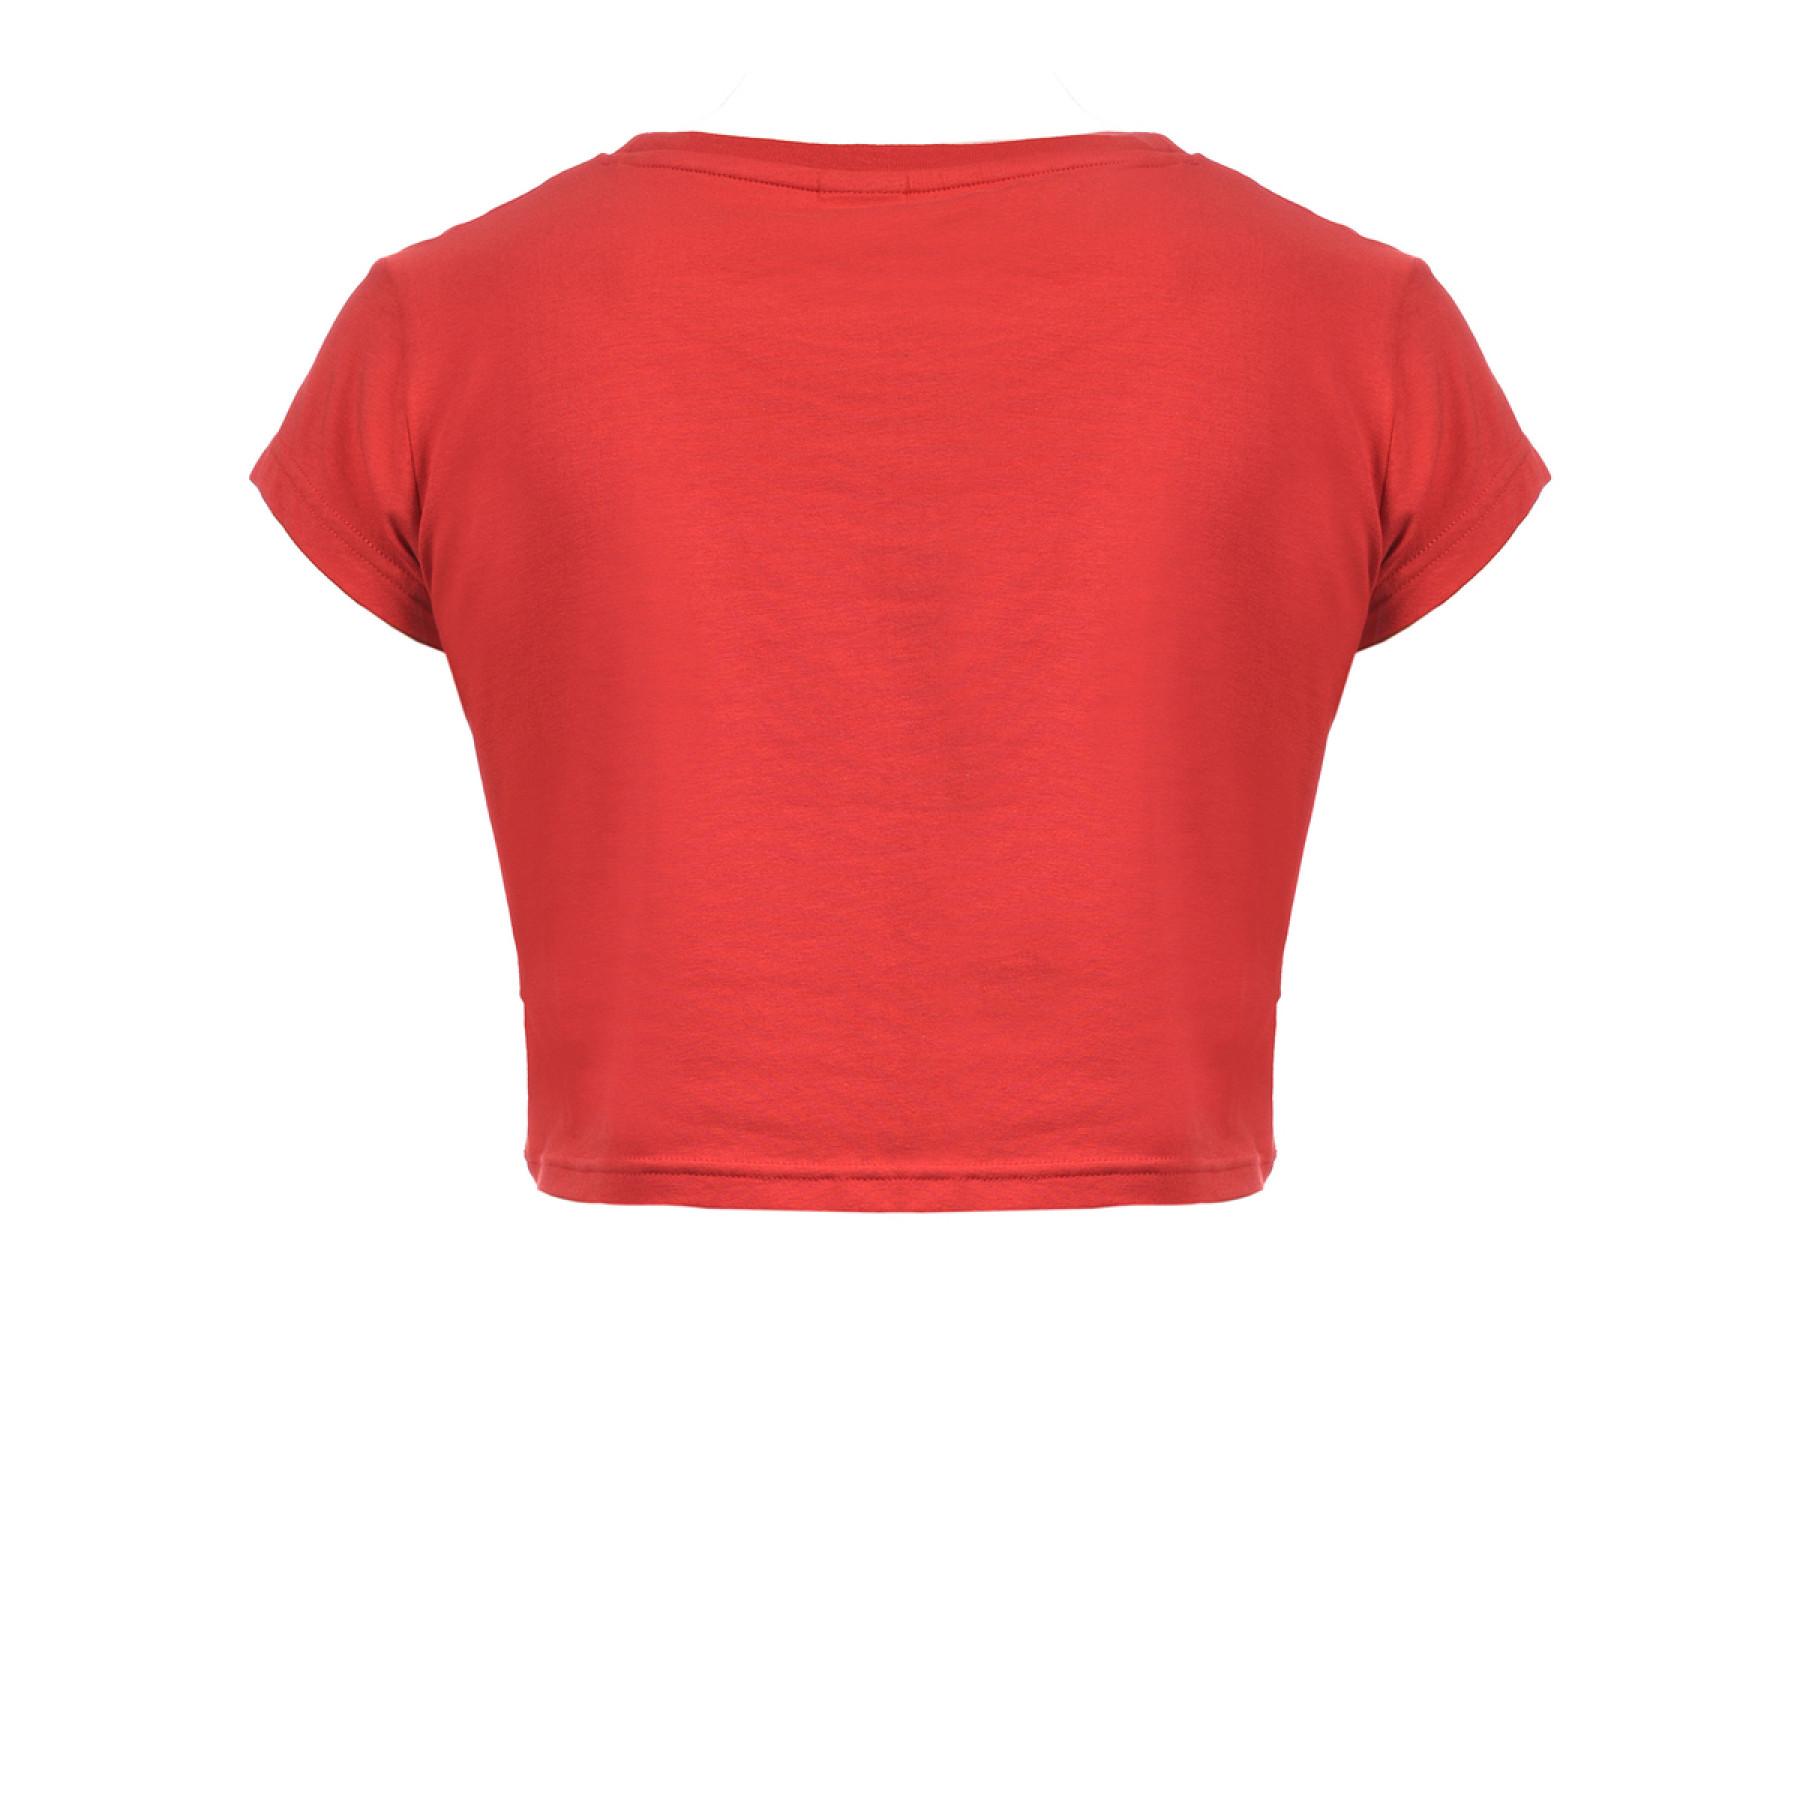 Women's crop top T-shirt Errea trend square